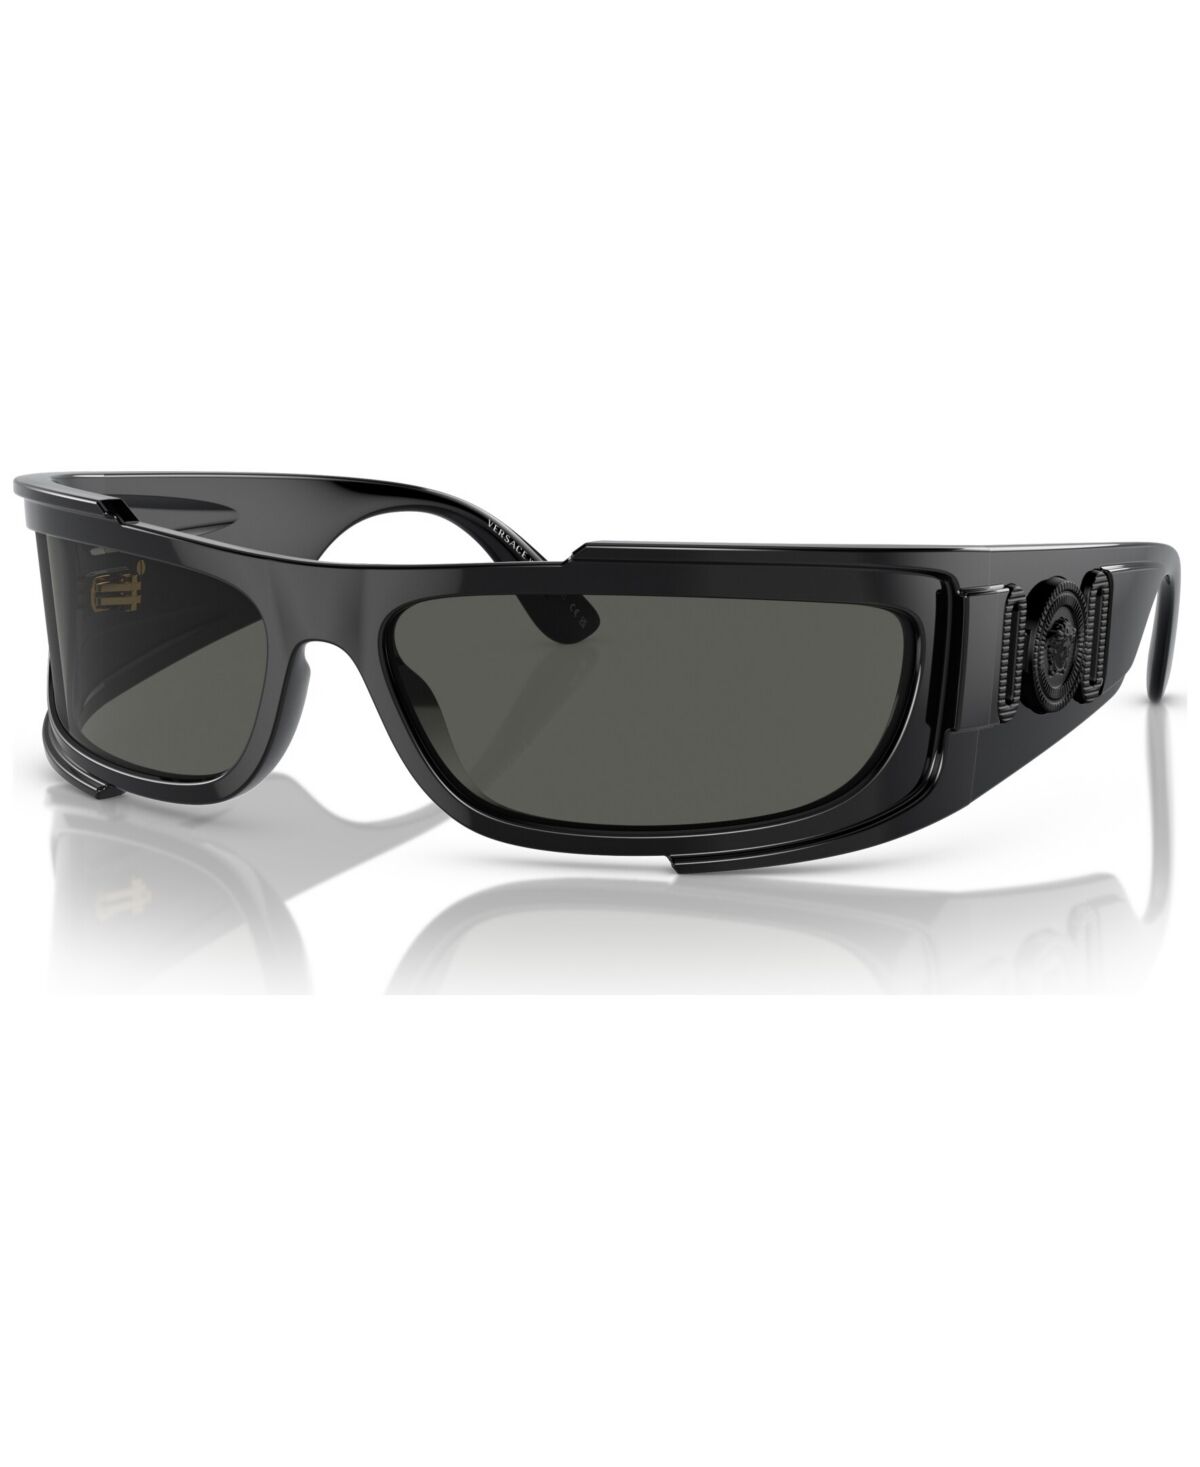 Versace Men's Sunglasses, VE4446 - Black